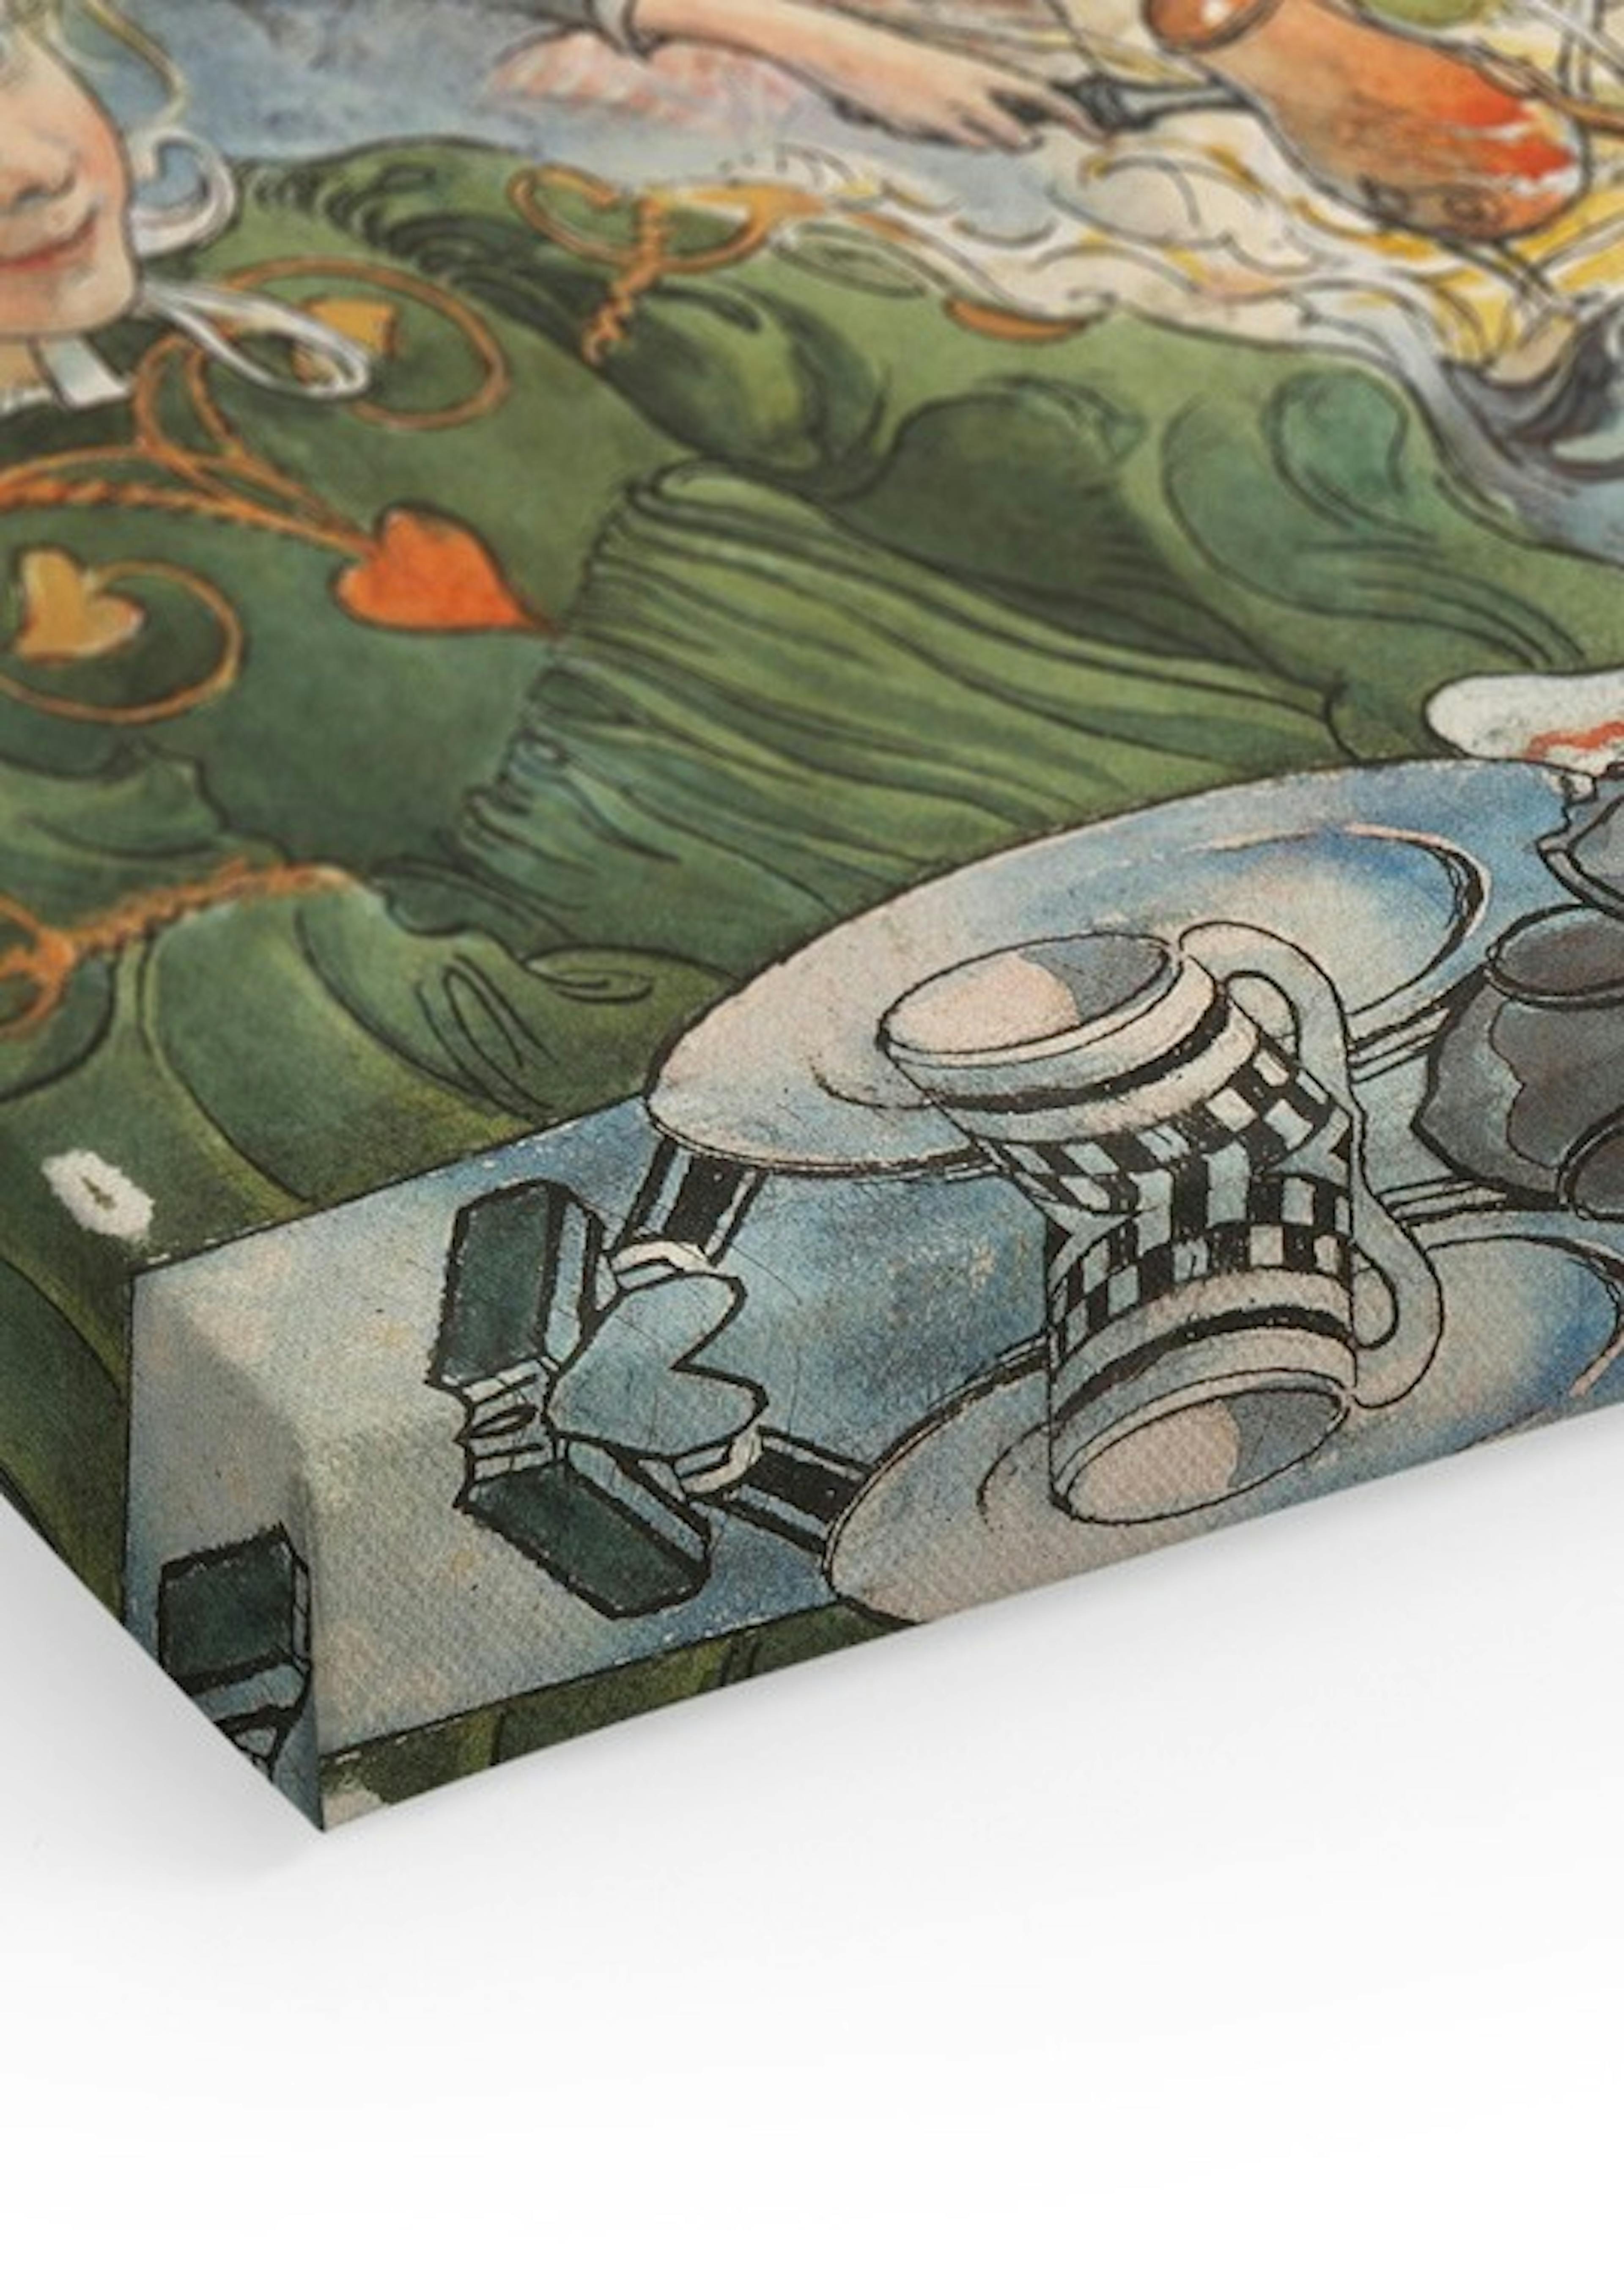 Carl Larsson - Crayfishing Obraz na plátně